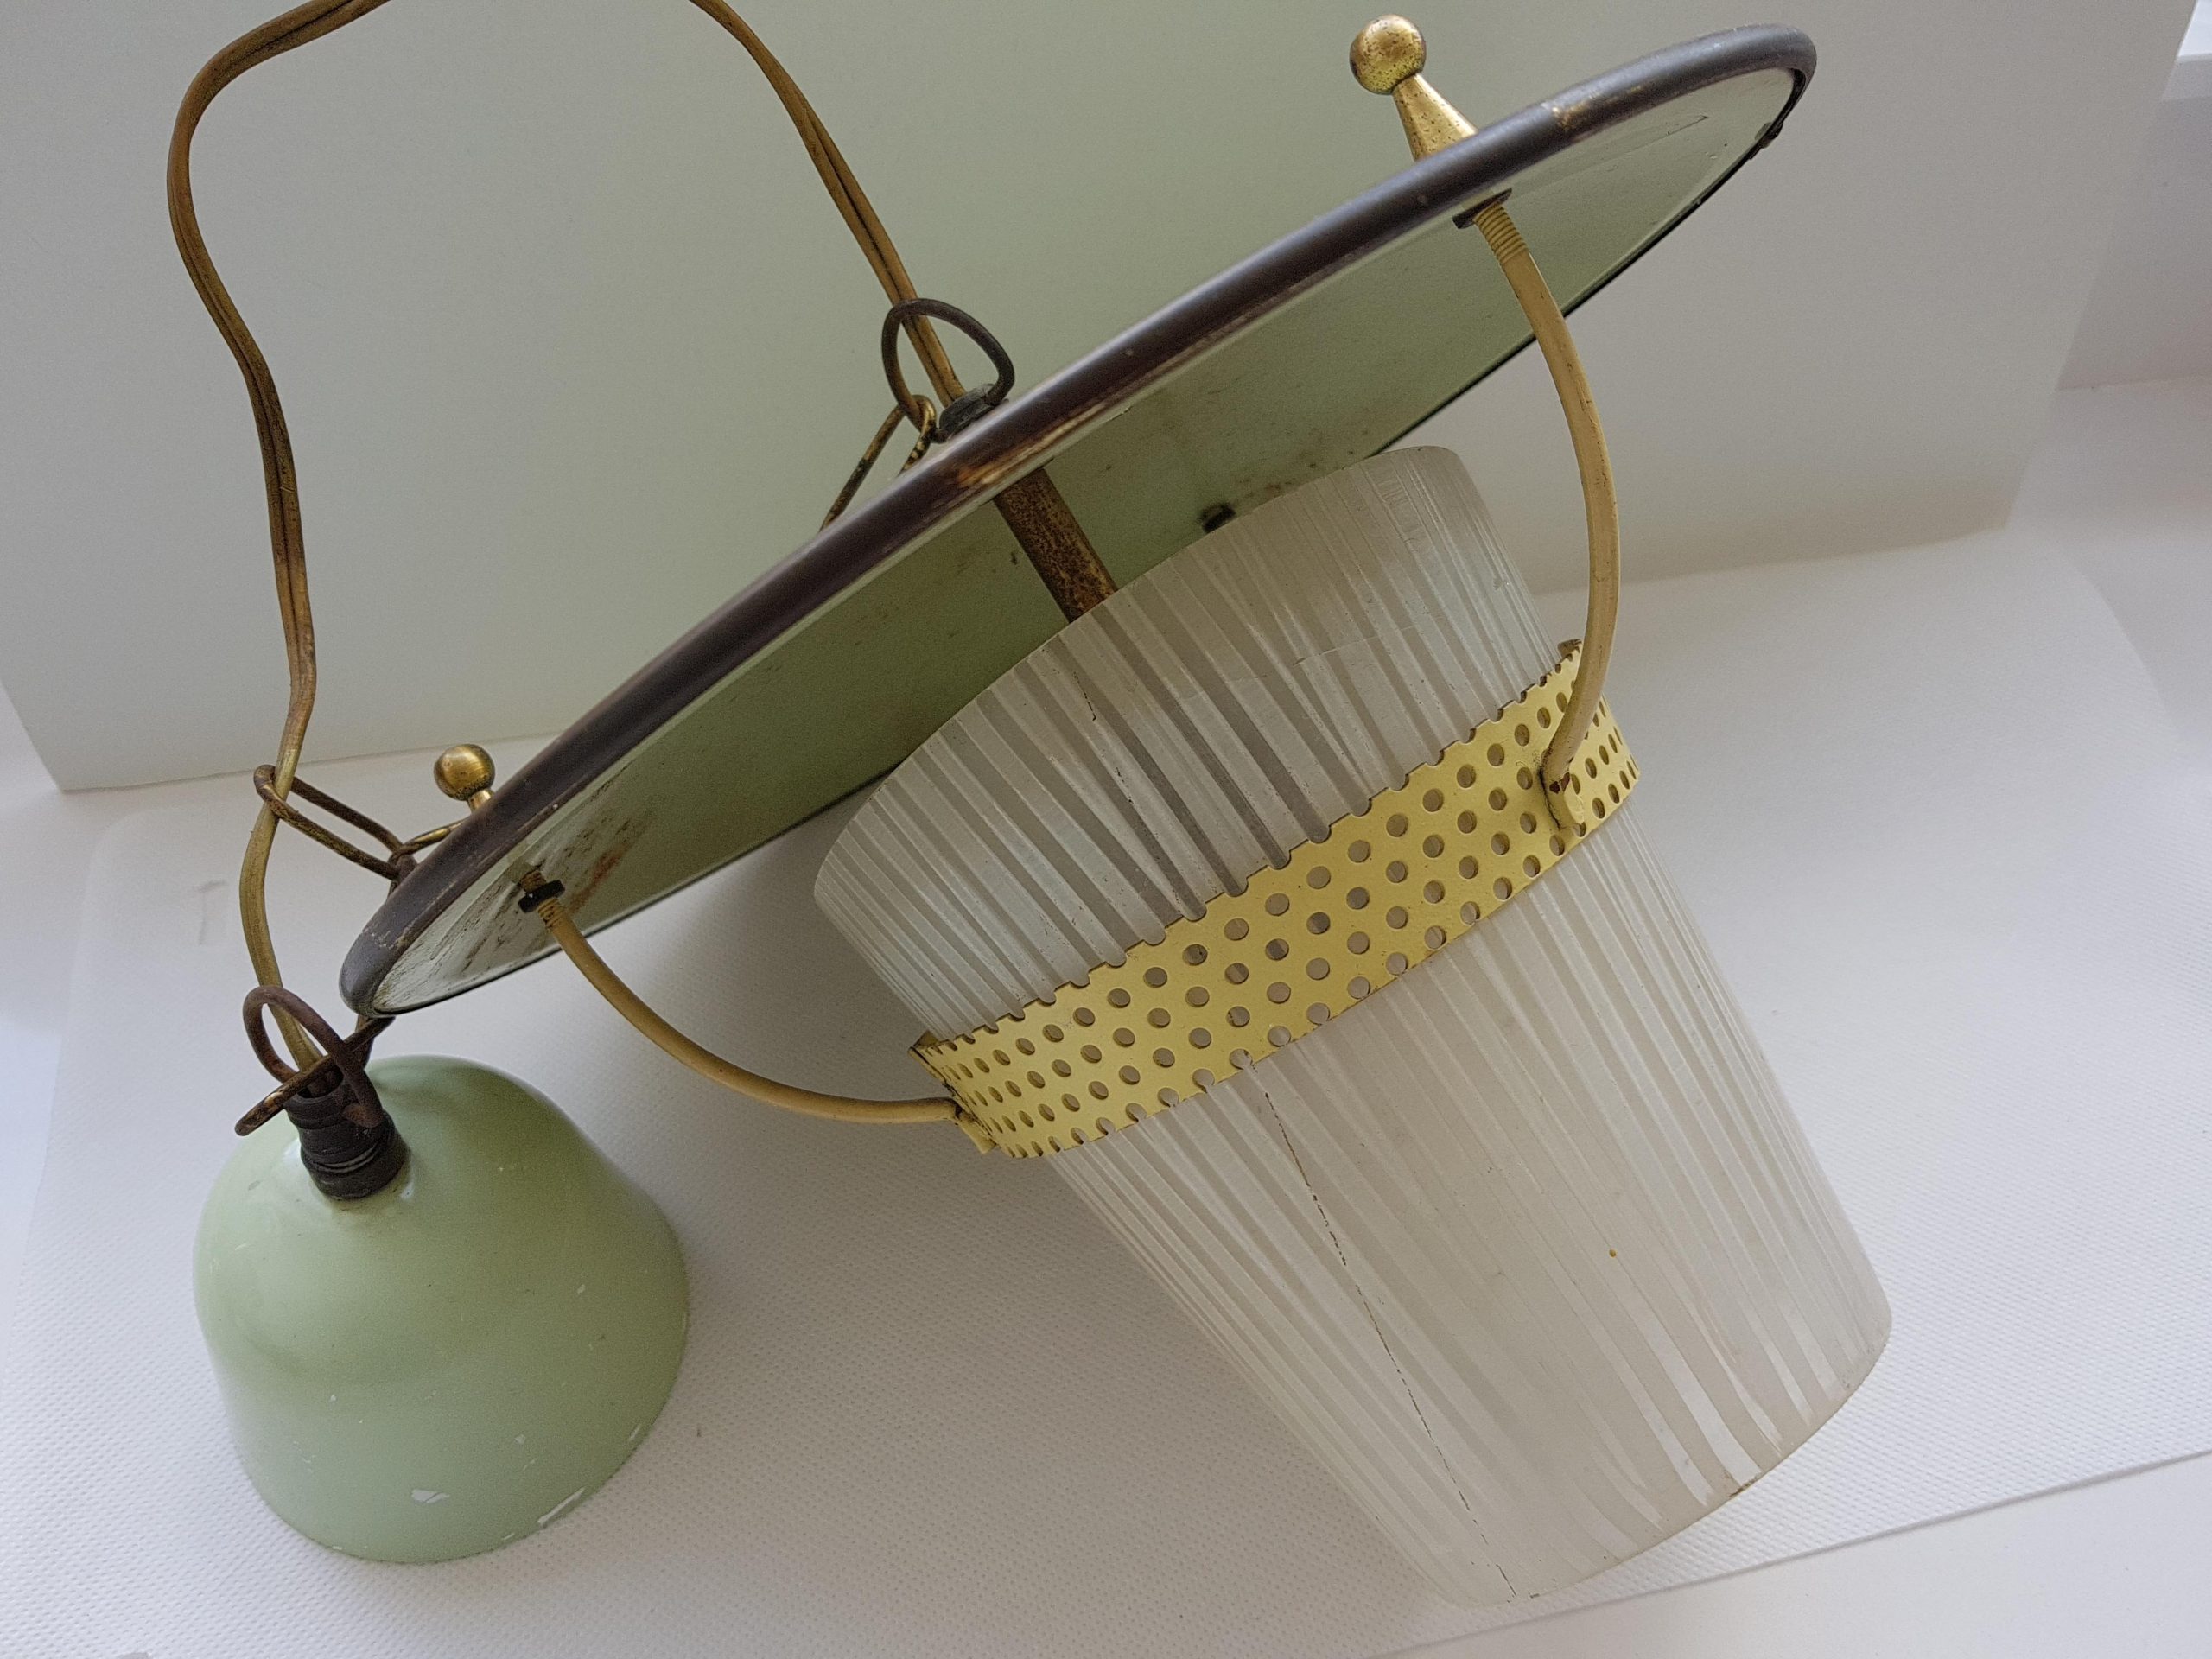 Philips?? Vintage hanglamp . Groen met gele rand met glazen kapje. Vintage Webshop SennaBenna